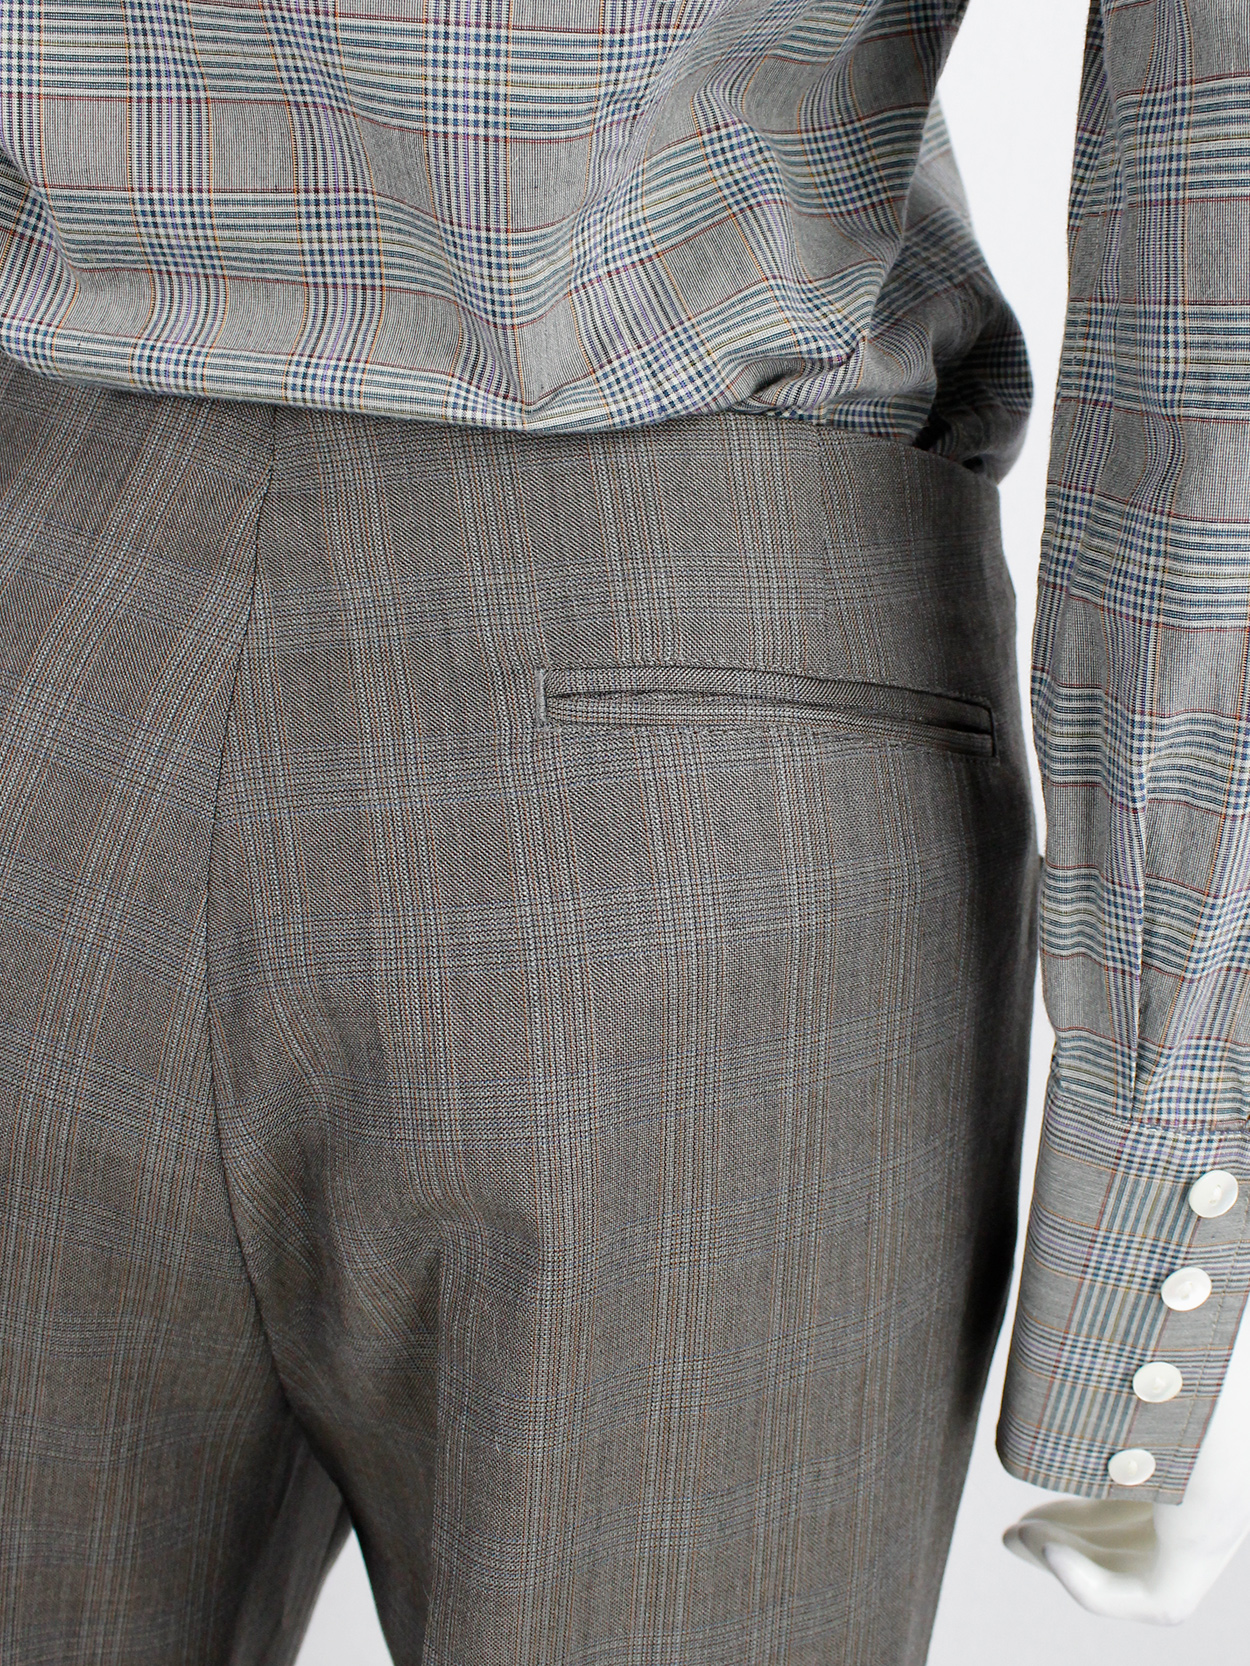 Maison Martin Margiela brown tartan trousers with side belt detail fall 2004 (2)